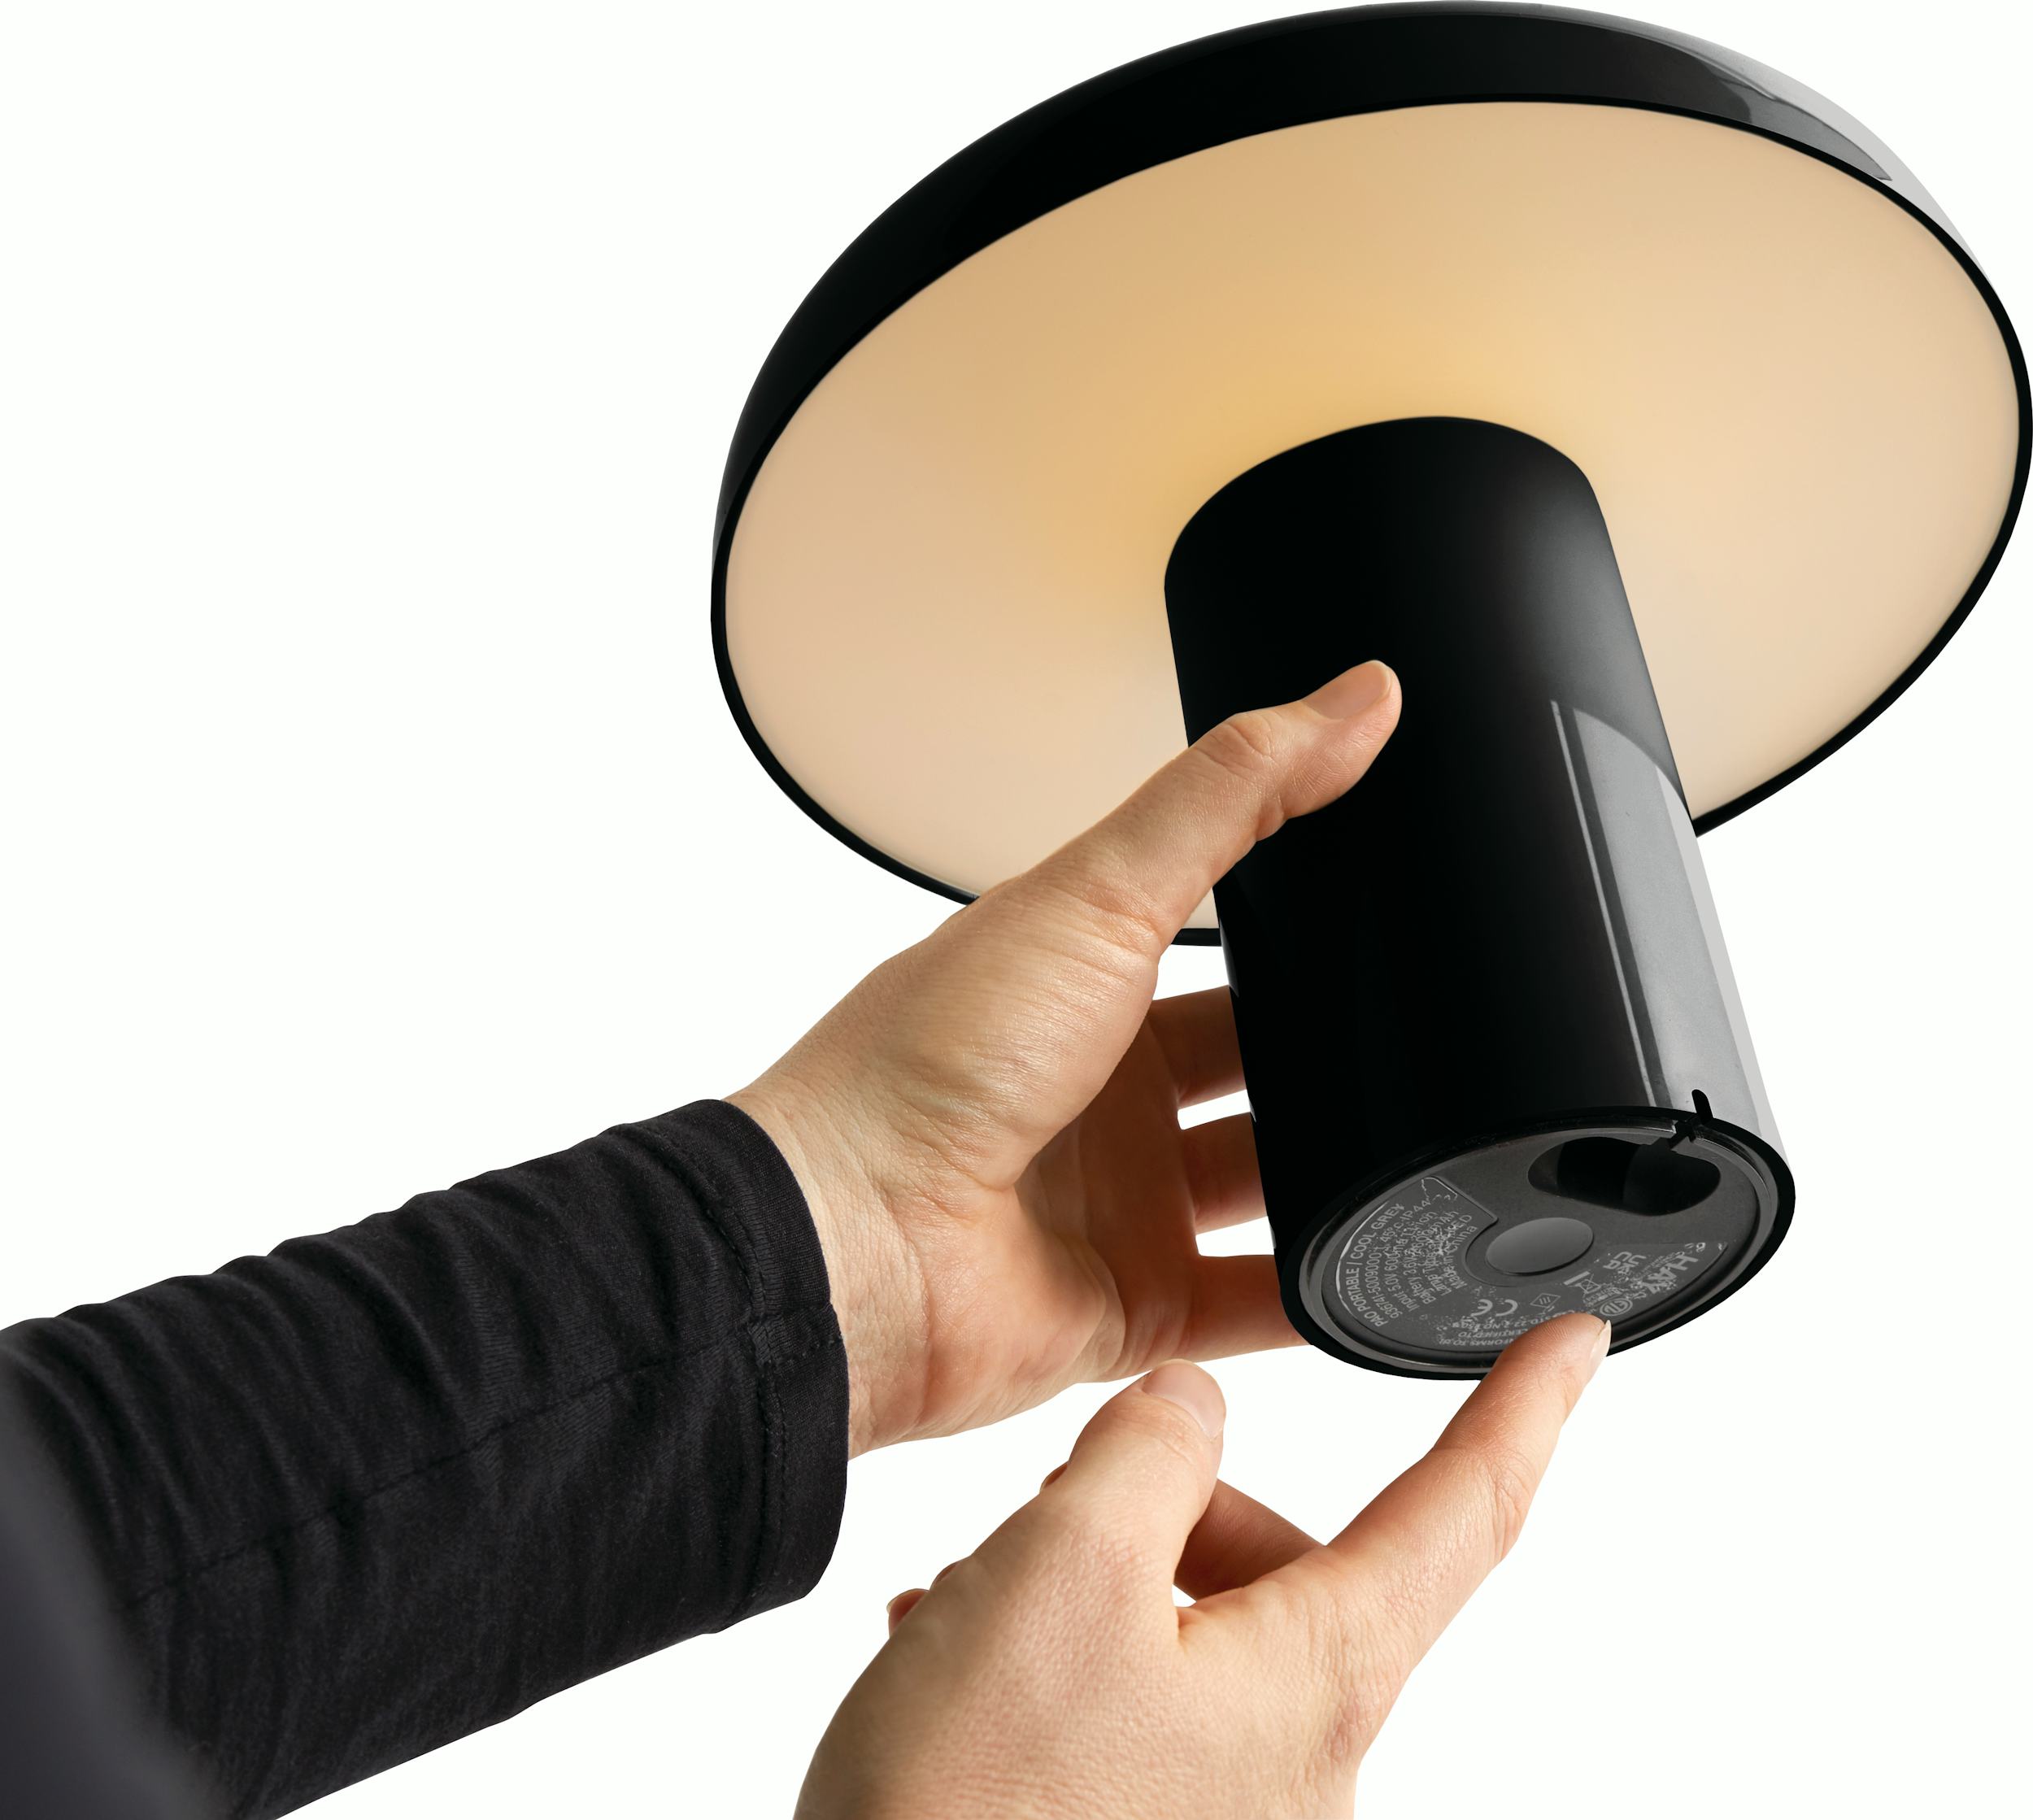 Panthella Portable Lamp – Design Within Reach